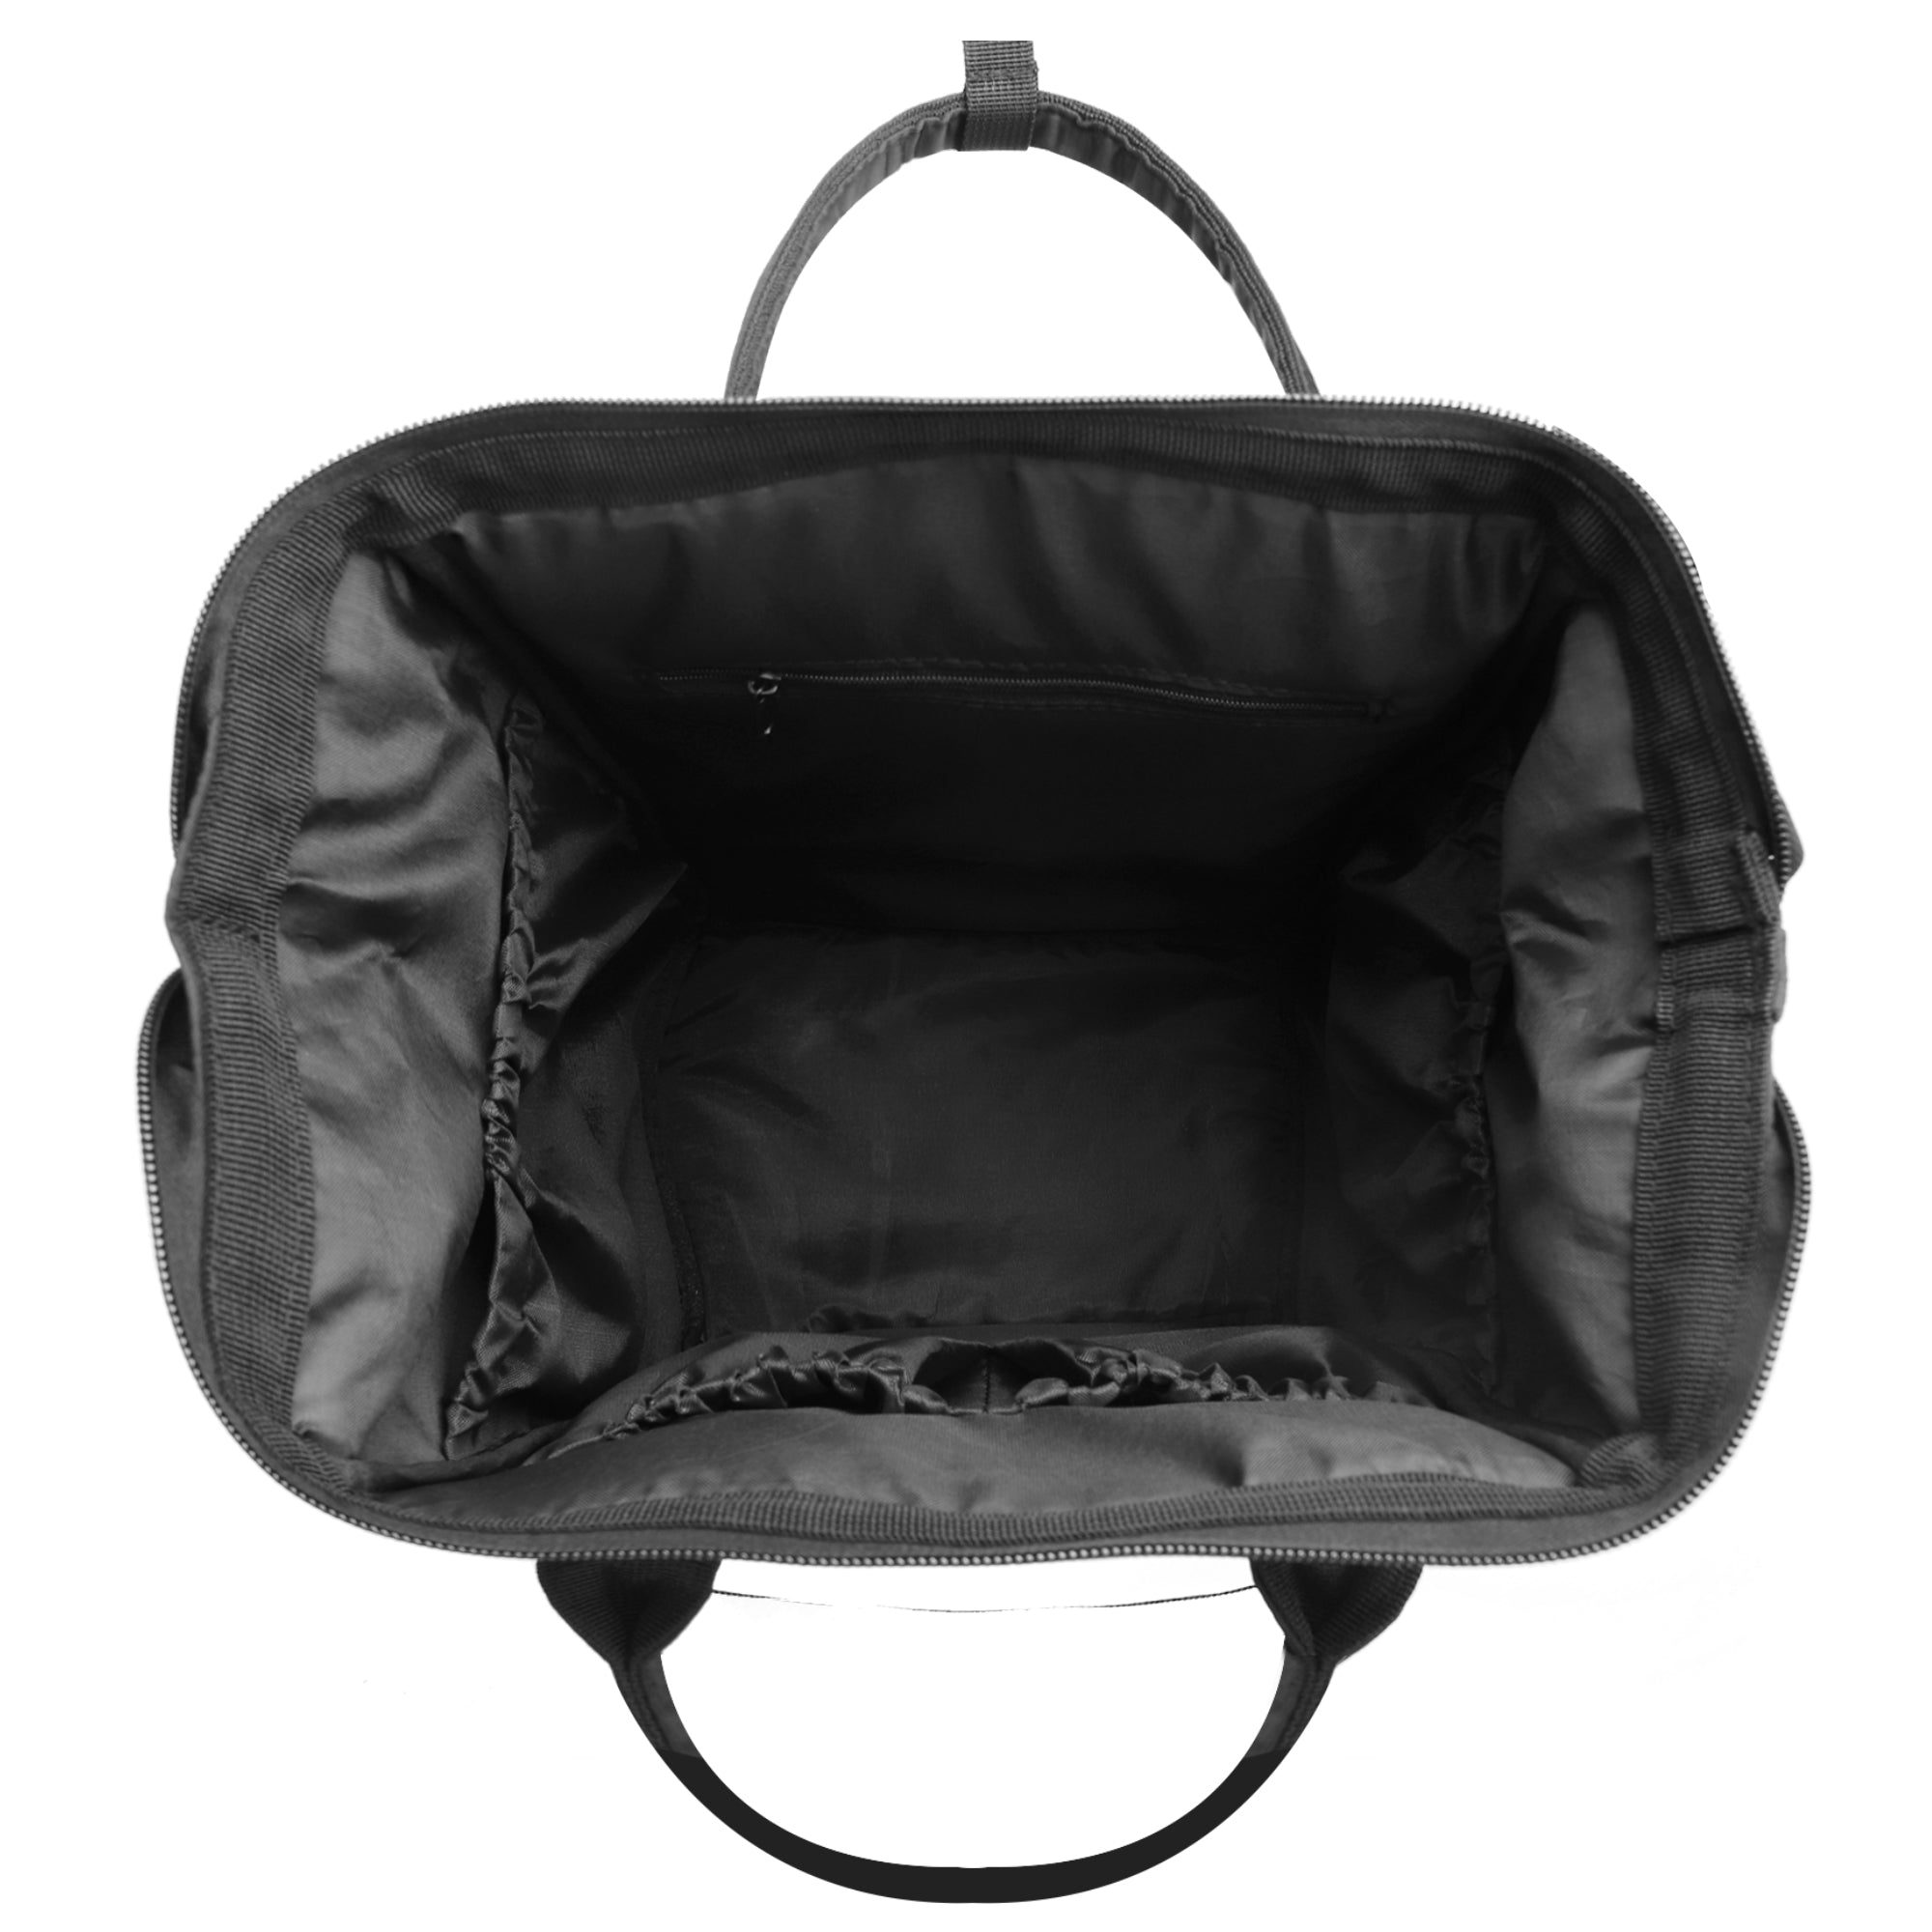 Large Capacity Diaper Backpack - Where the Buffalo Roam (Coal)